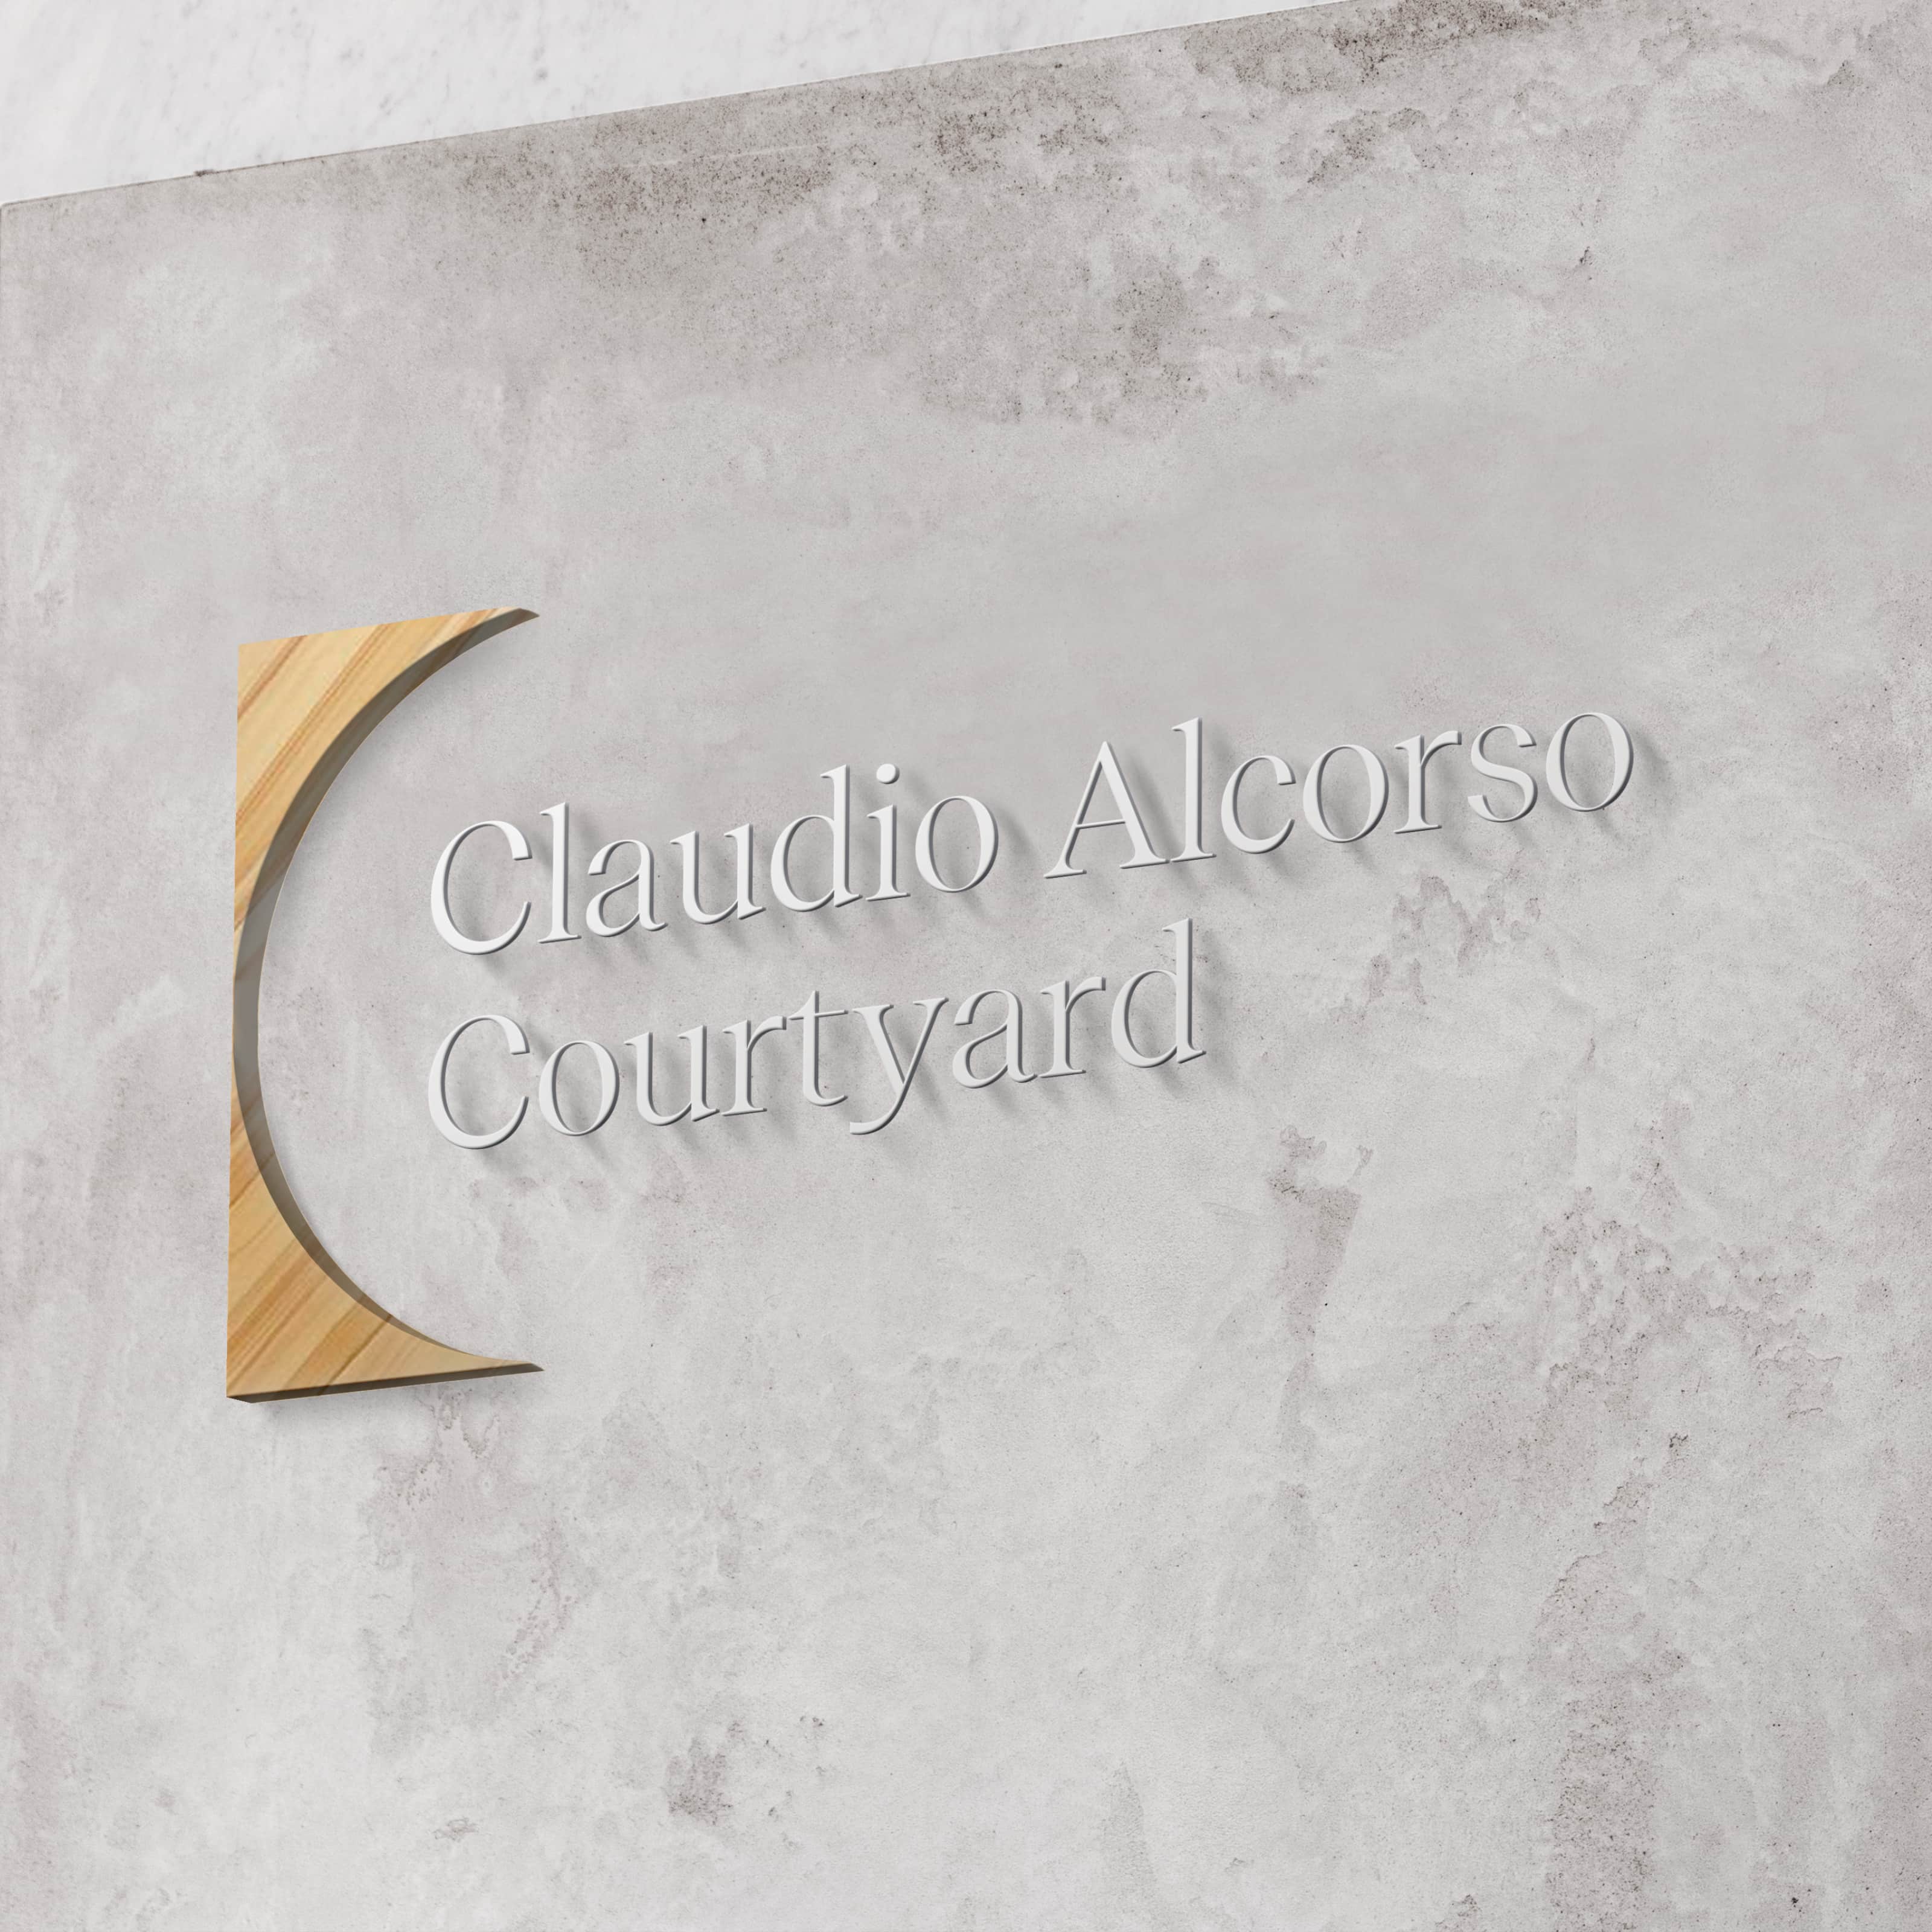 Sandstone and aluminium signage mockup for the Claudio Alcorso Courtyard. 